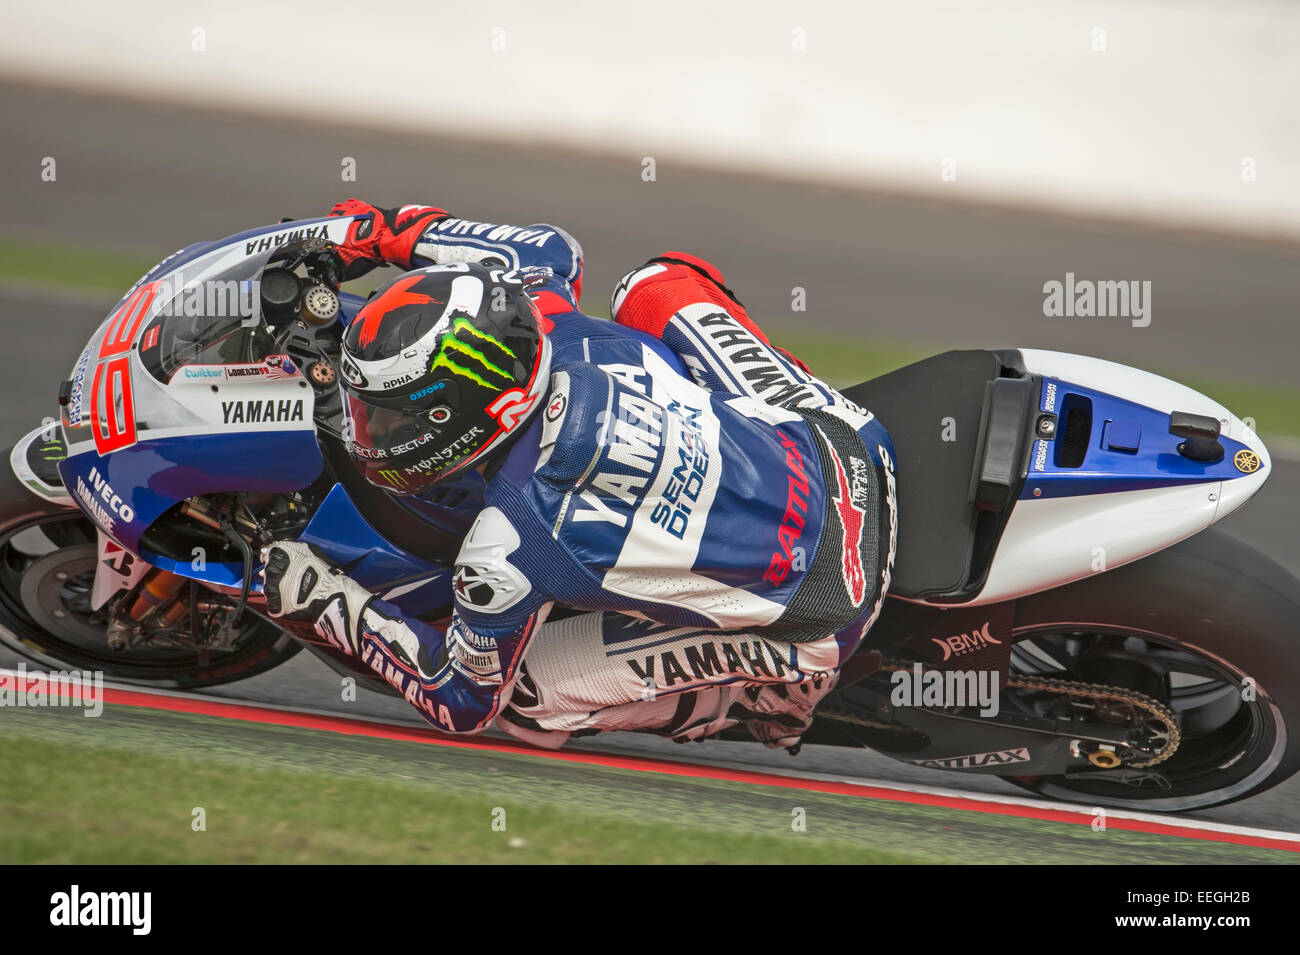 Jorge Lorenzo, Yamaha, 2013 Stockfoto